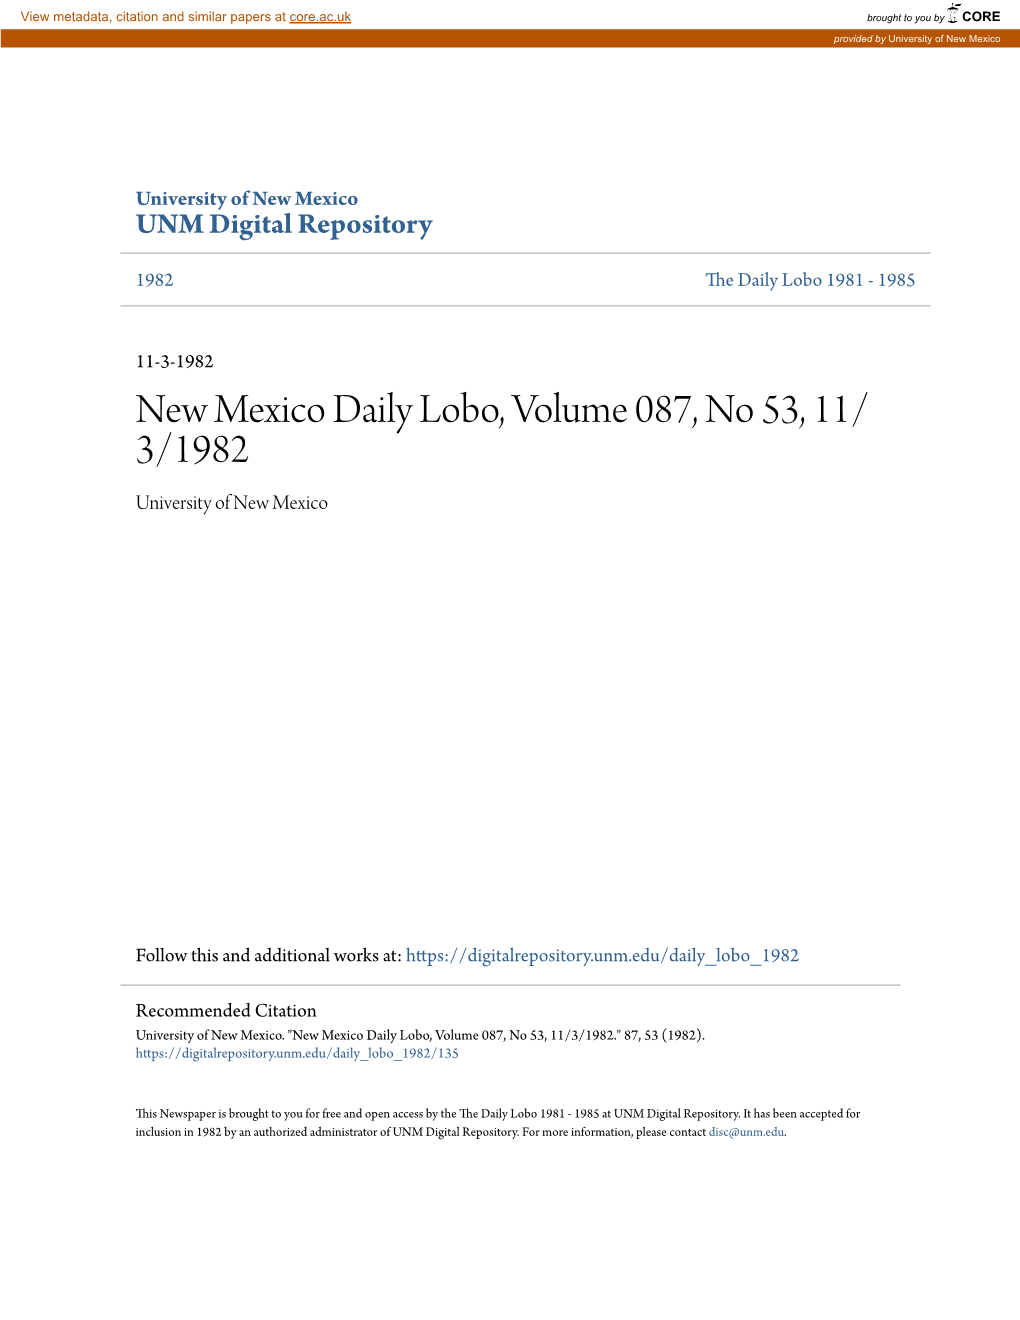 New Mexico Daily Lobo, Volume 087, No 53, 11/3/1982." 87, 53 (1982)